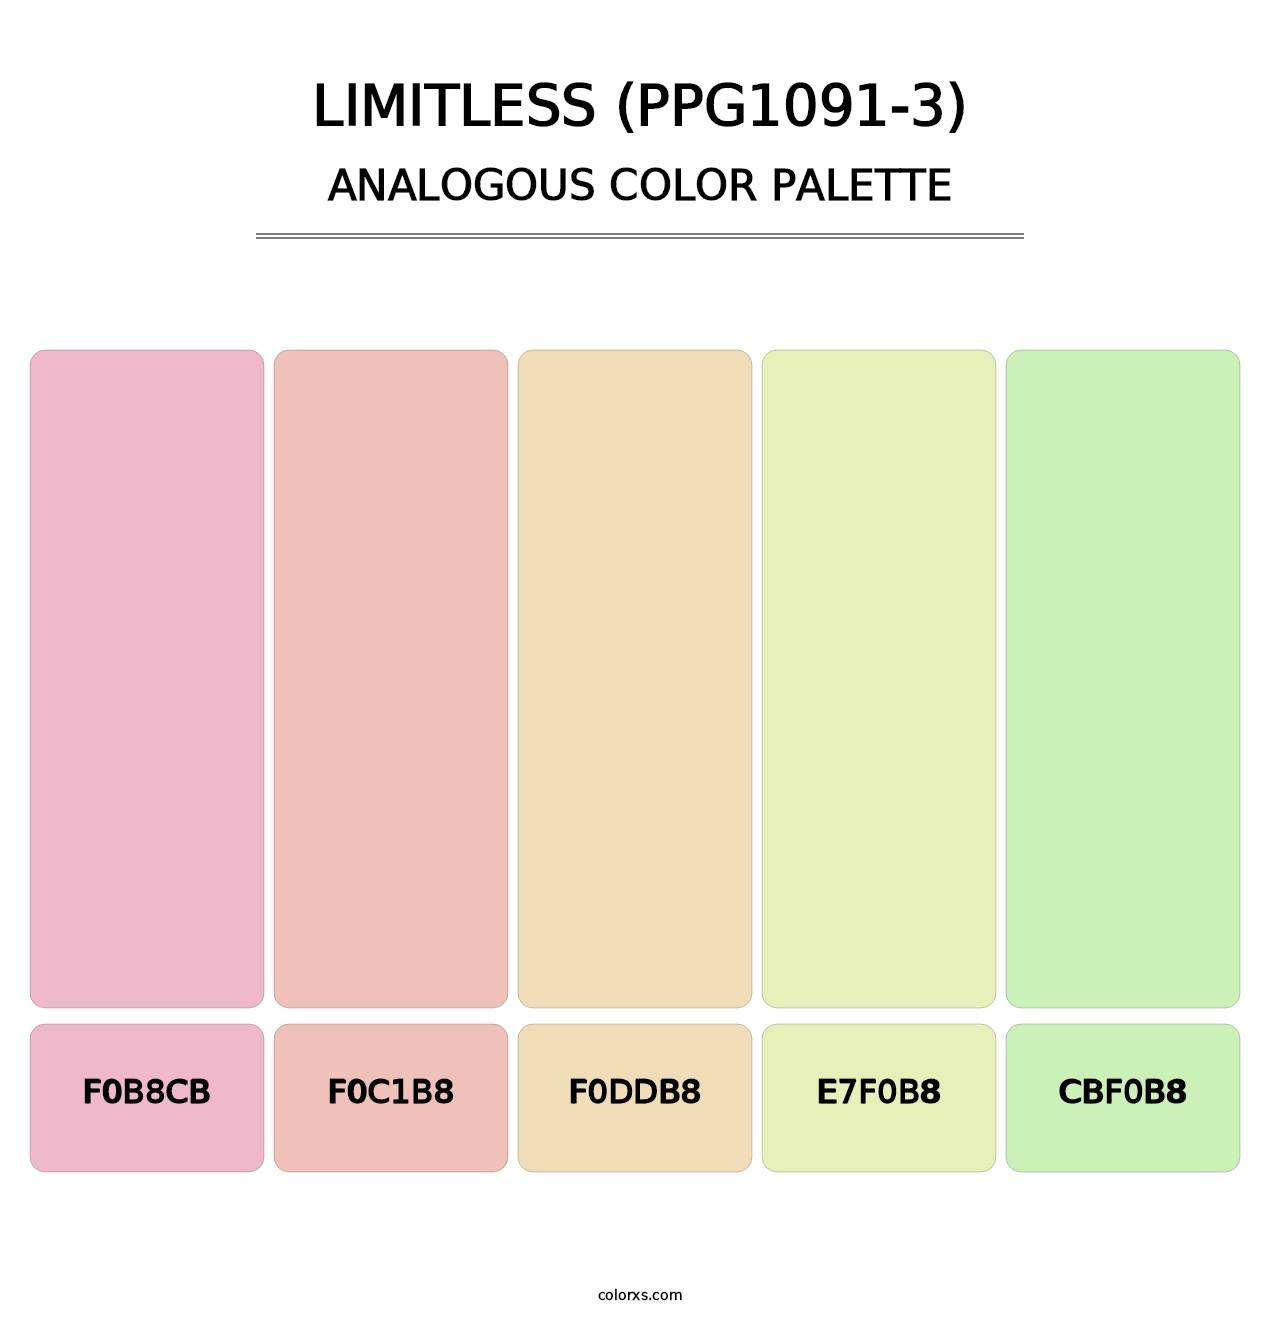 Limitless (PPG1091-3) - Analogous Color Palette